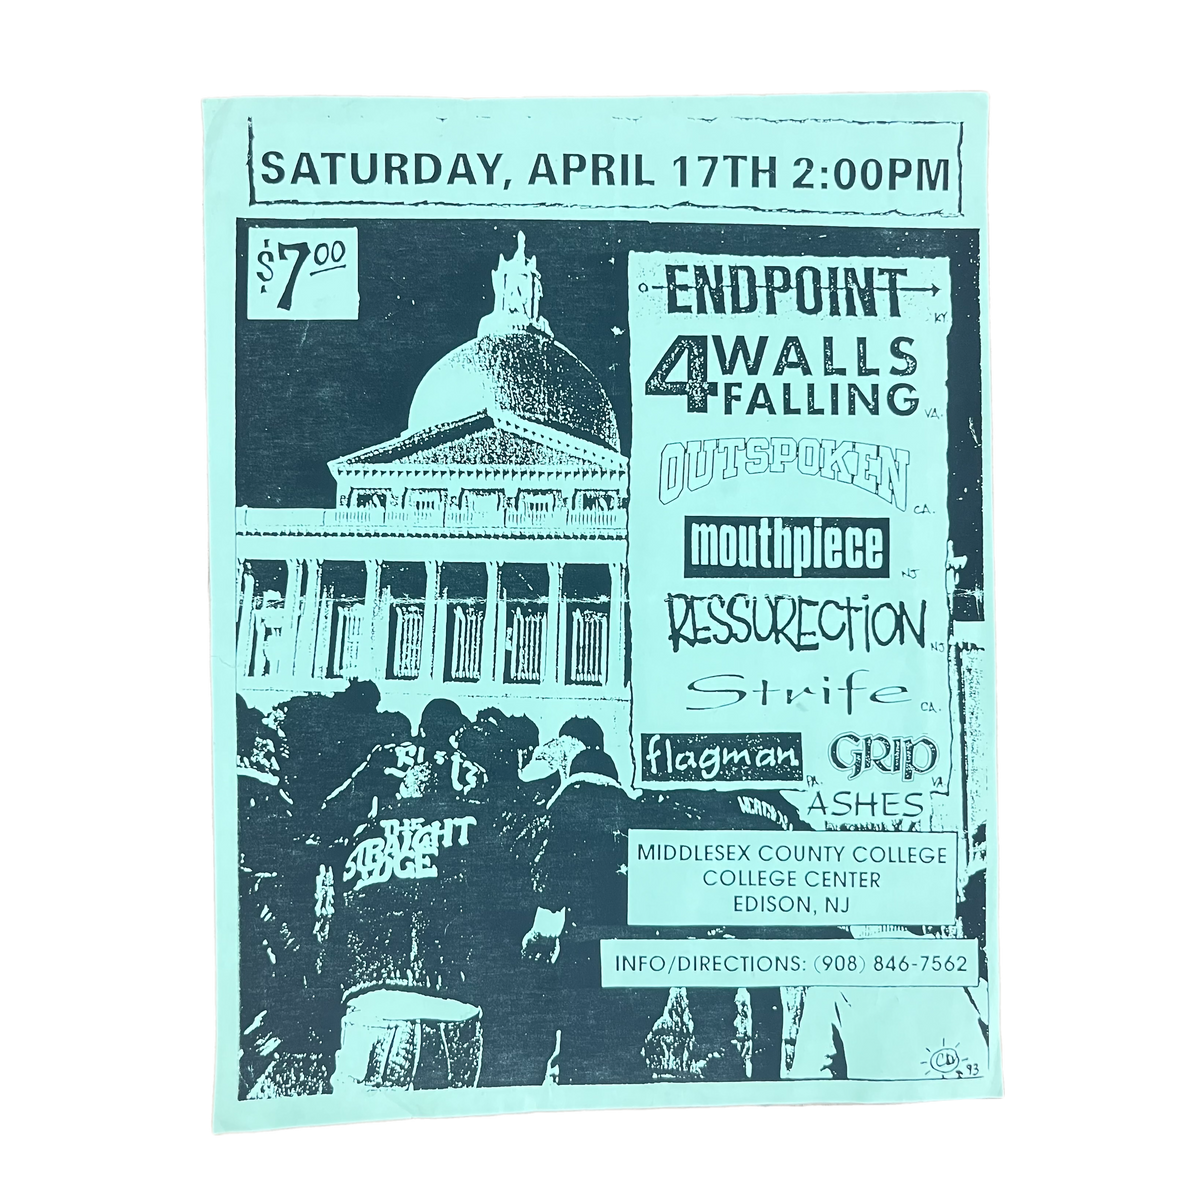 Vintage 4 Walls Falling Flagman Outspoken &quot;Middlesex County College Center, NJ&quot; Show Flyer